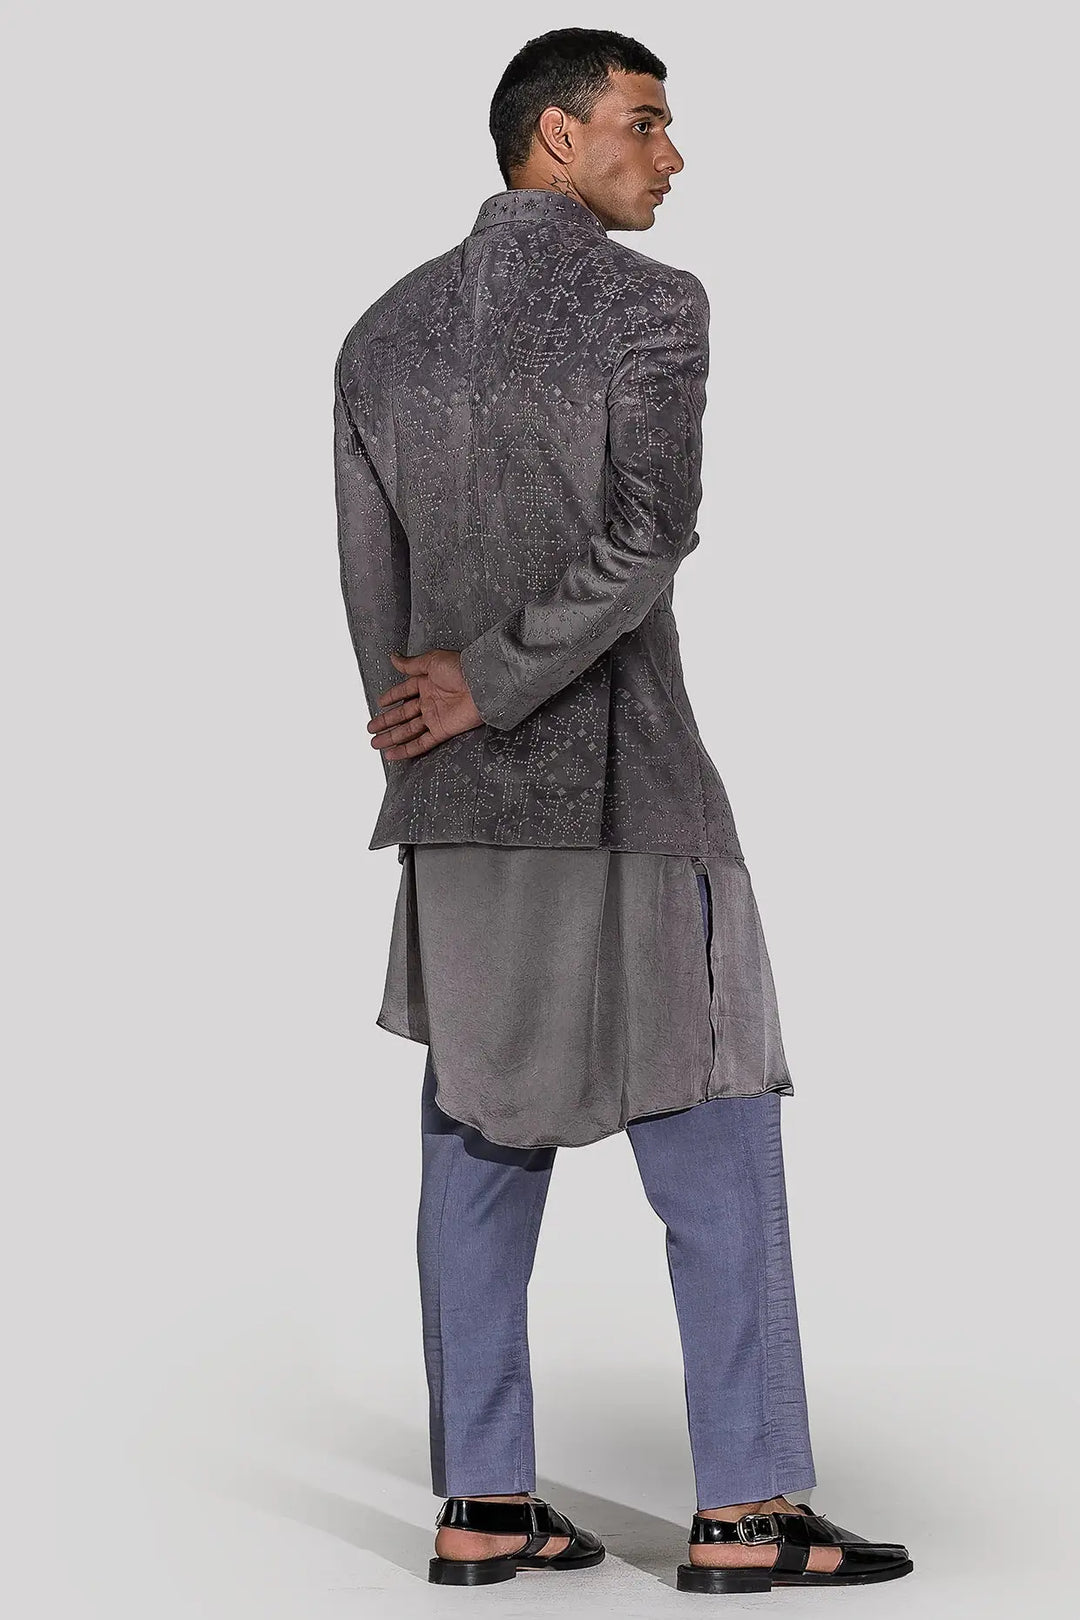 Charcoal Grey Geometric Embroidery Bandhgala - Asuka Couture